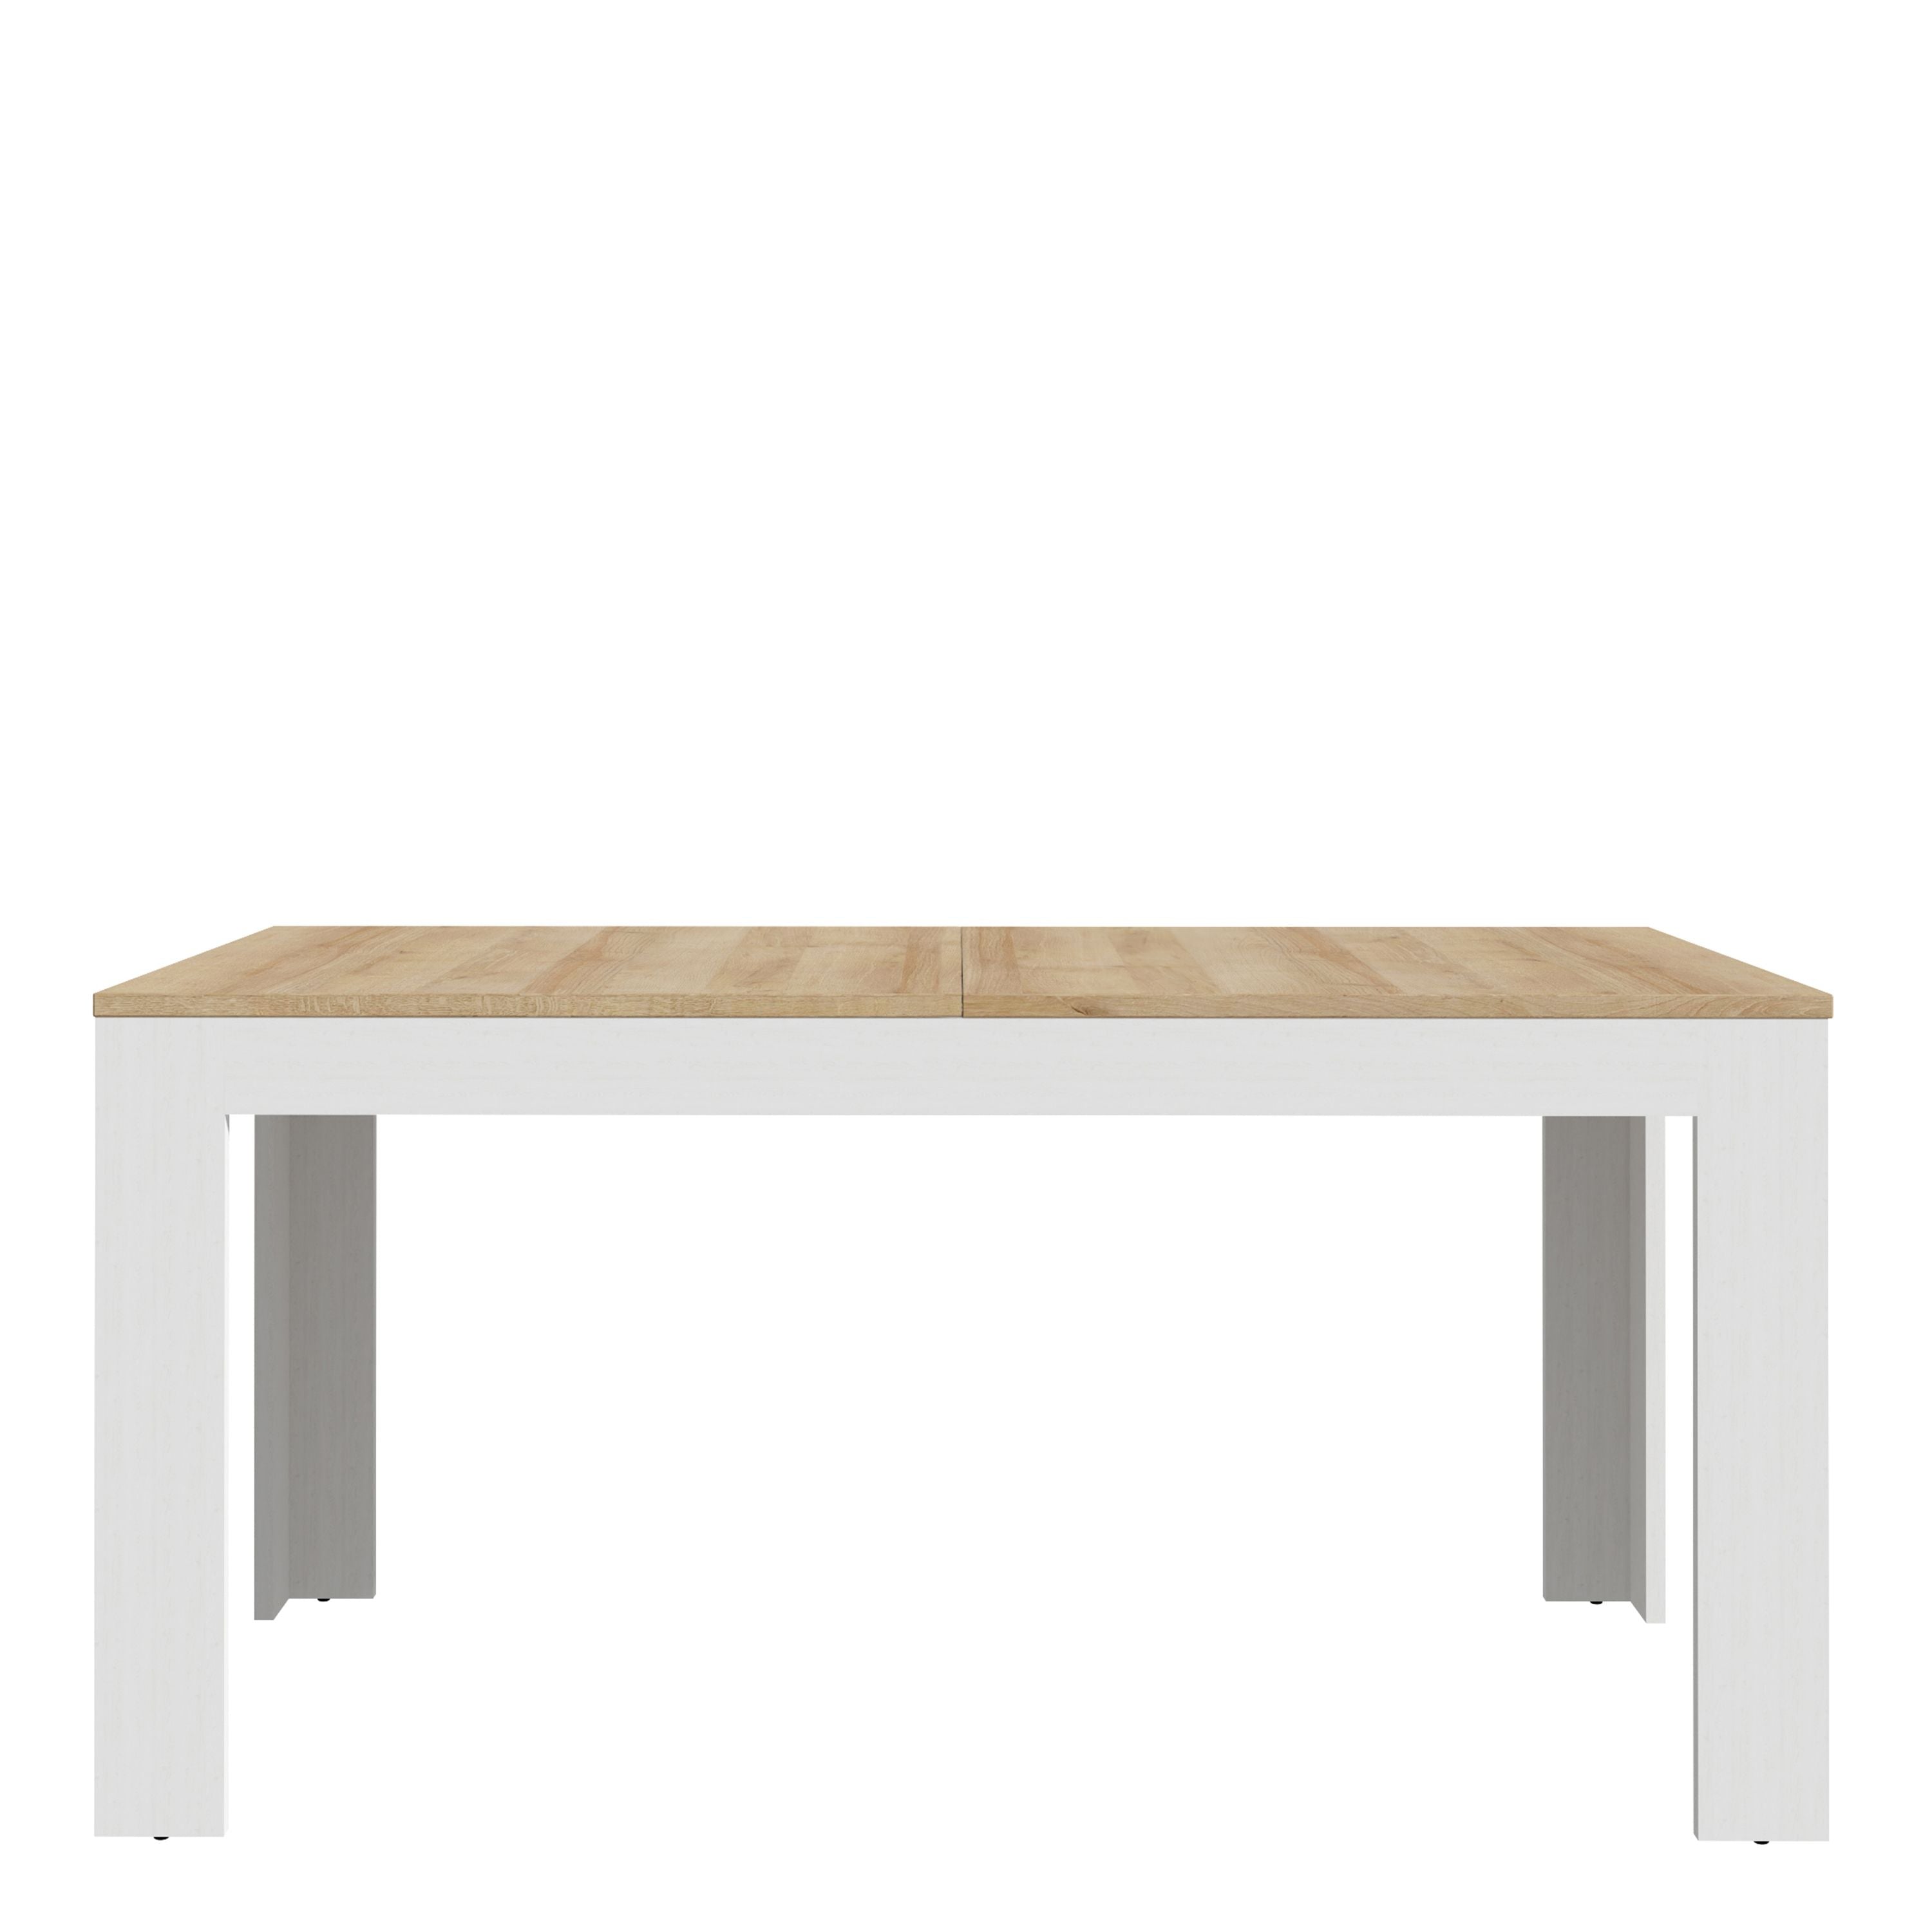 Bohol Extending Dining Table 160-207cm in Riviera Oak/White Furniture To Go Ltd